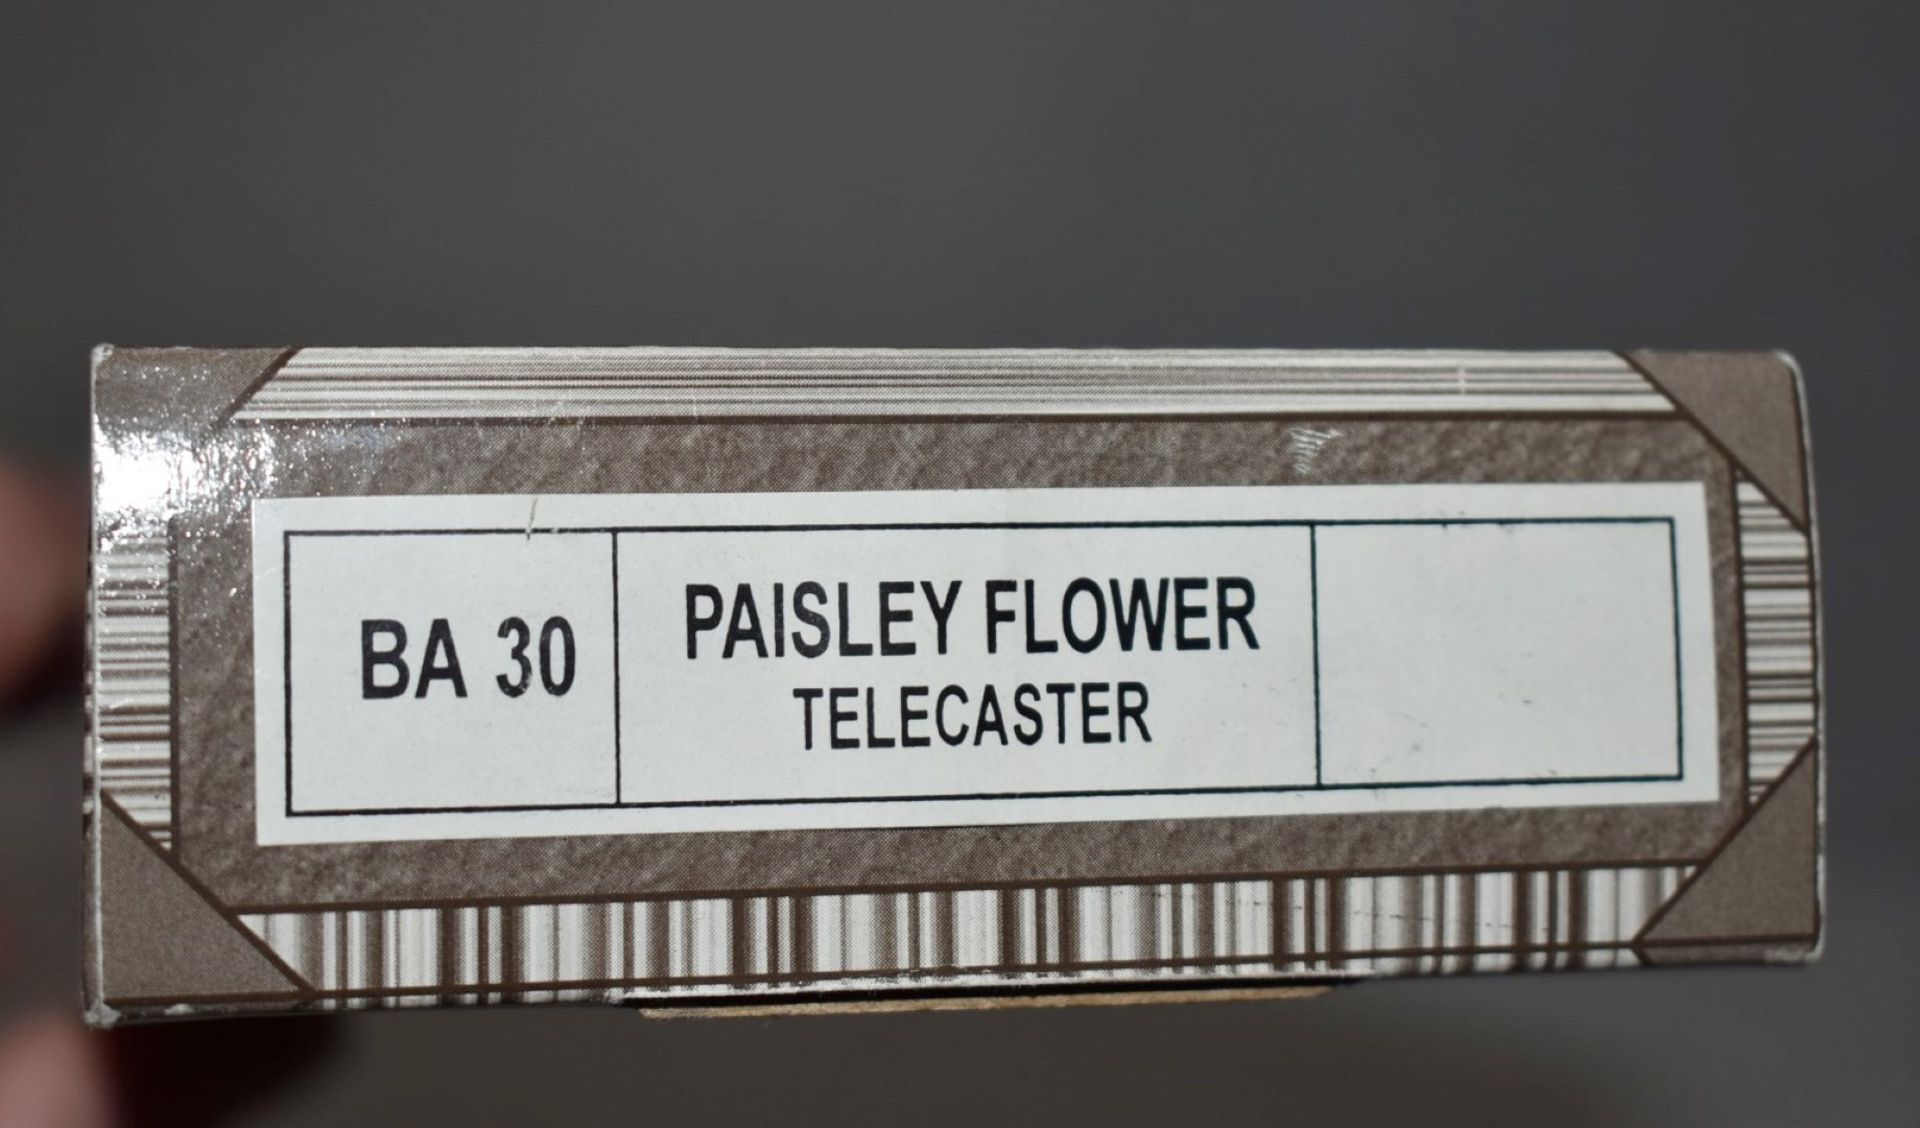 1 x Miniature Hand Made Guitar - Paisley Flower, Fender Telecastor - New & Unused - RRP £35 - Image 4 of 4